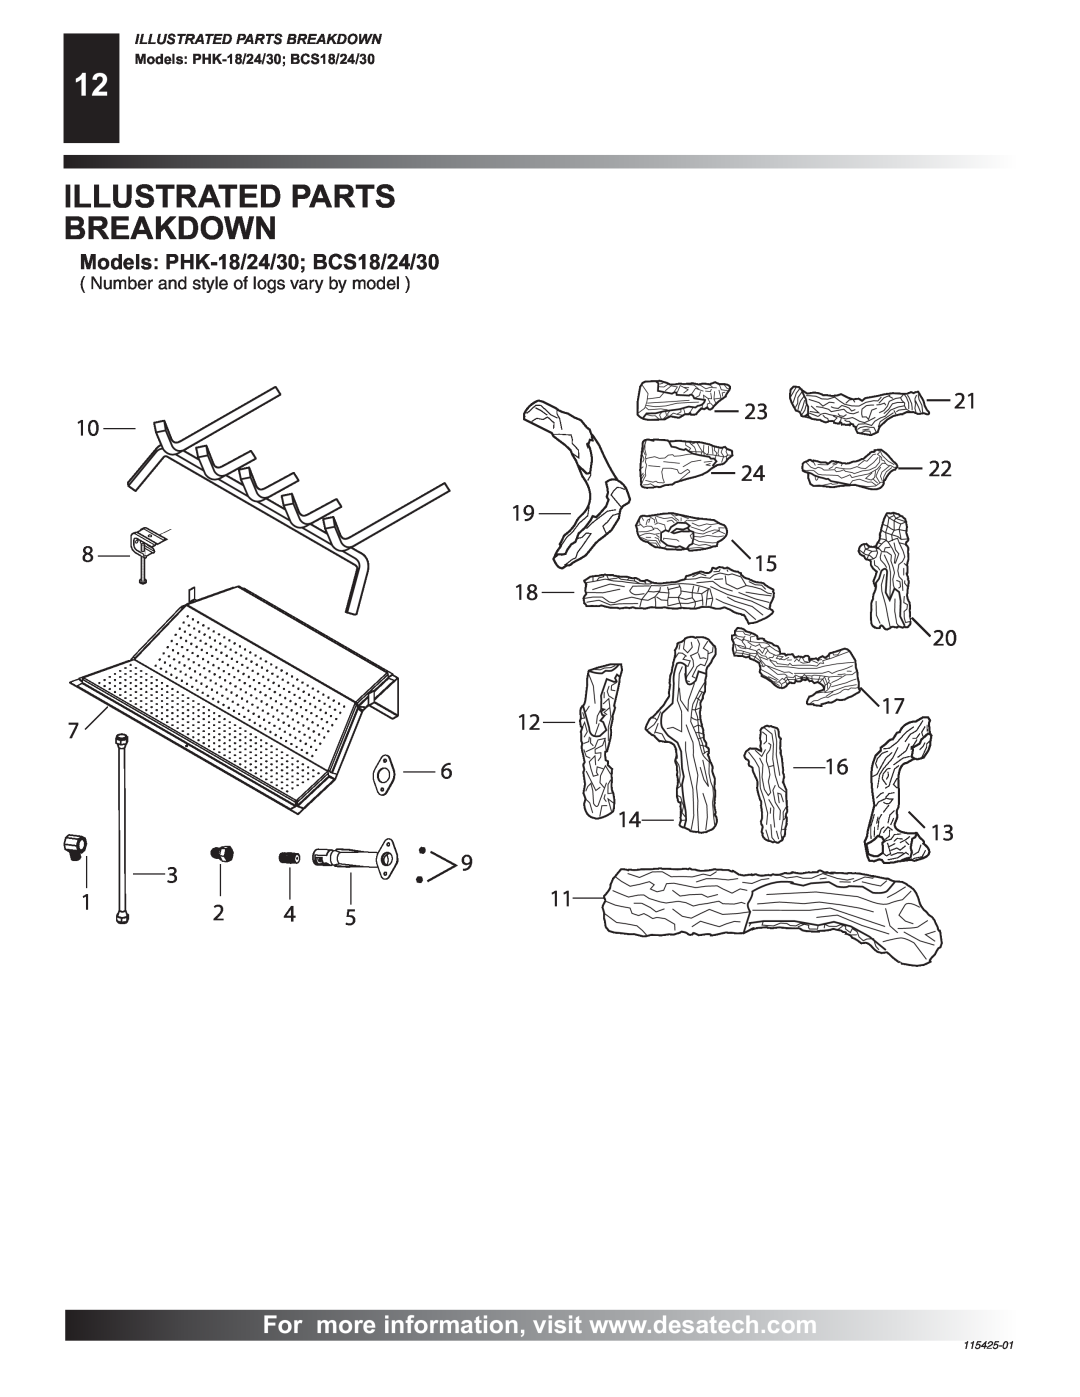 Desa PHK-18, PHK-24, PHK-30, BCS18, BCS24, BCS30 installation manual Illustrated Parts Breakdown 